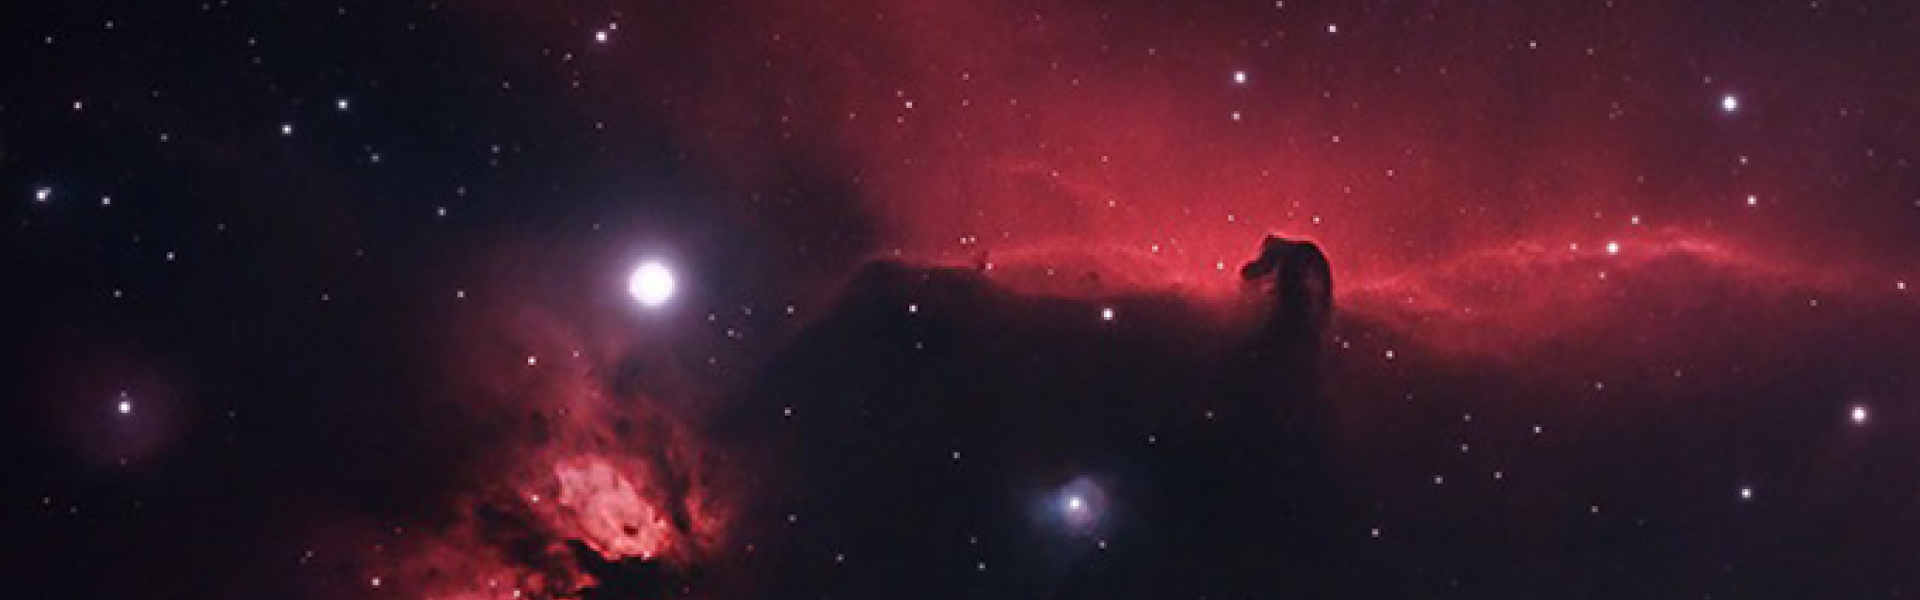 The Horsehead Nebula (and Flame Nebula) by Trevor Jones